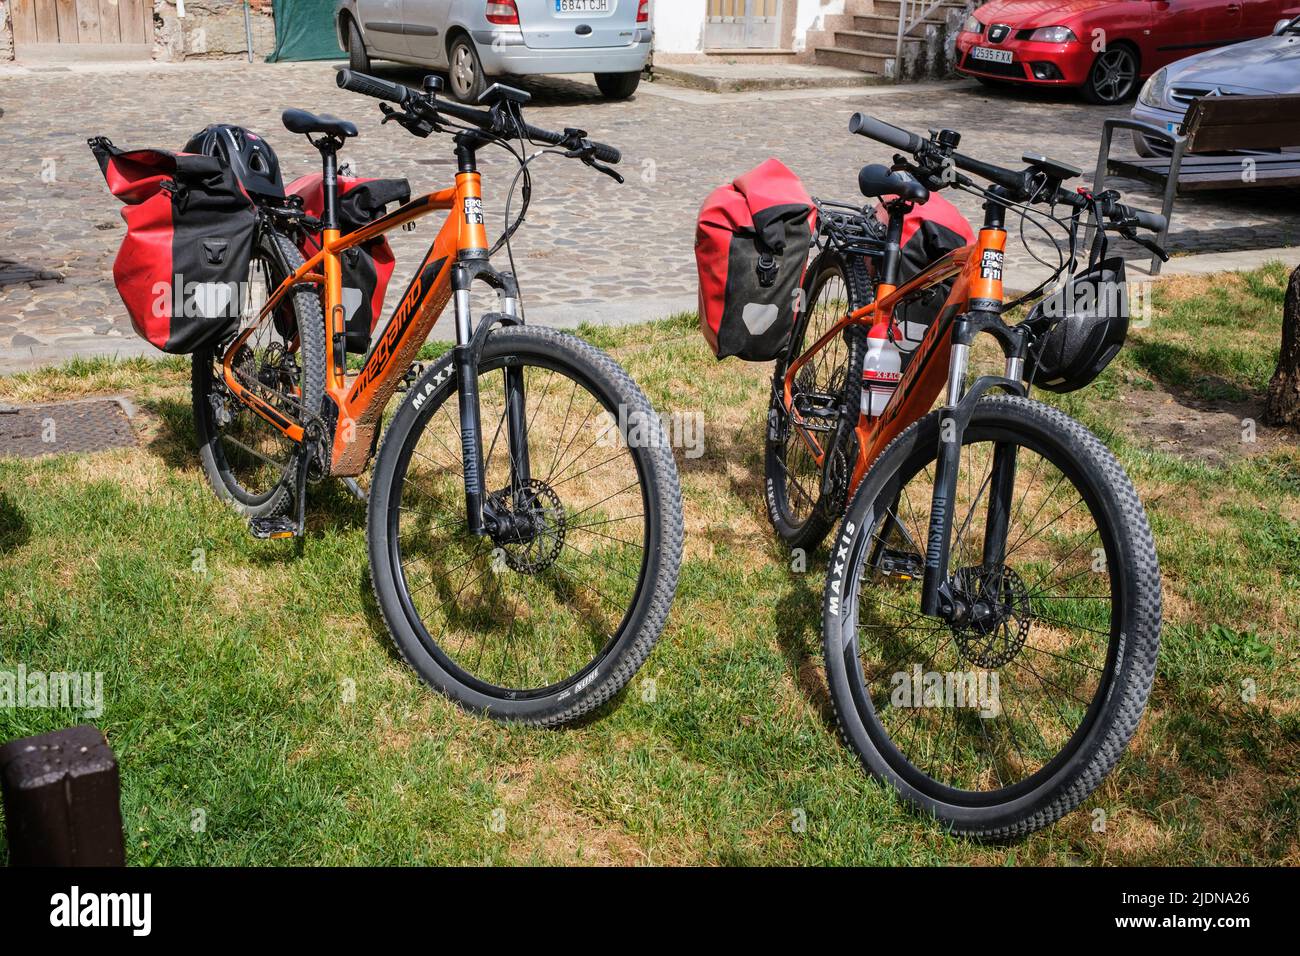 Spagna, Cacabelos, Castilla y Leon. Biciclette usate dai ciclisti sul Camino de Santiago. Foto Stock